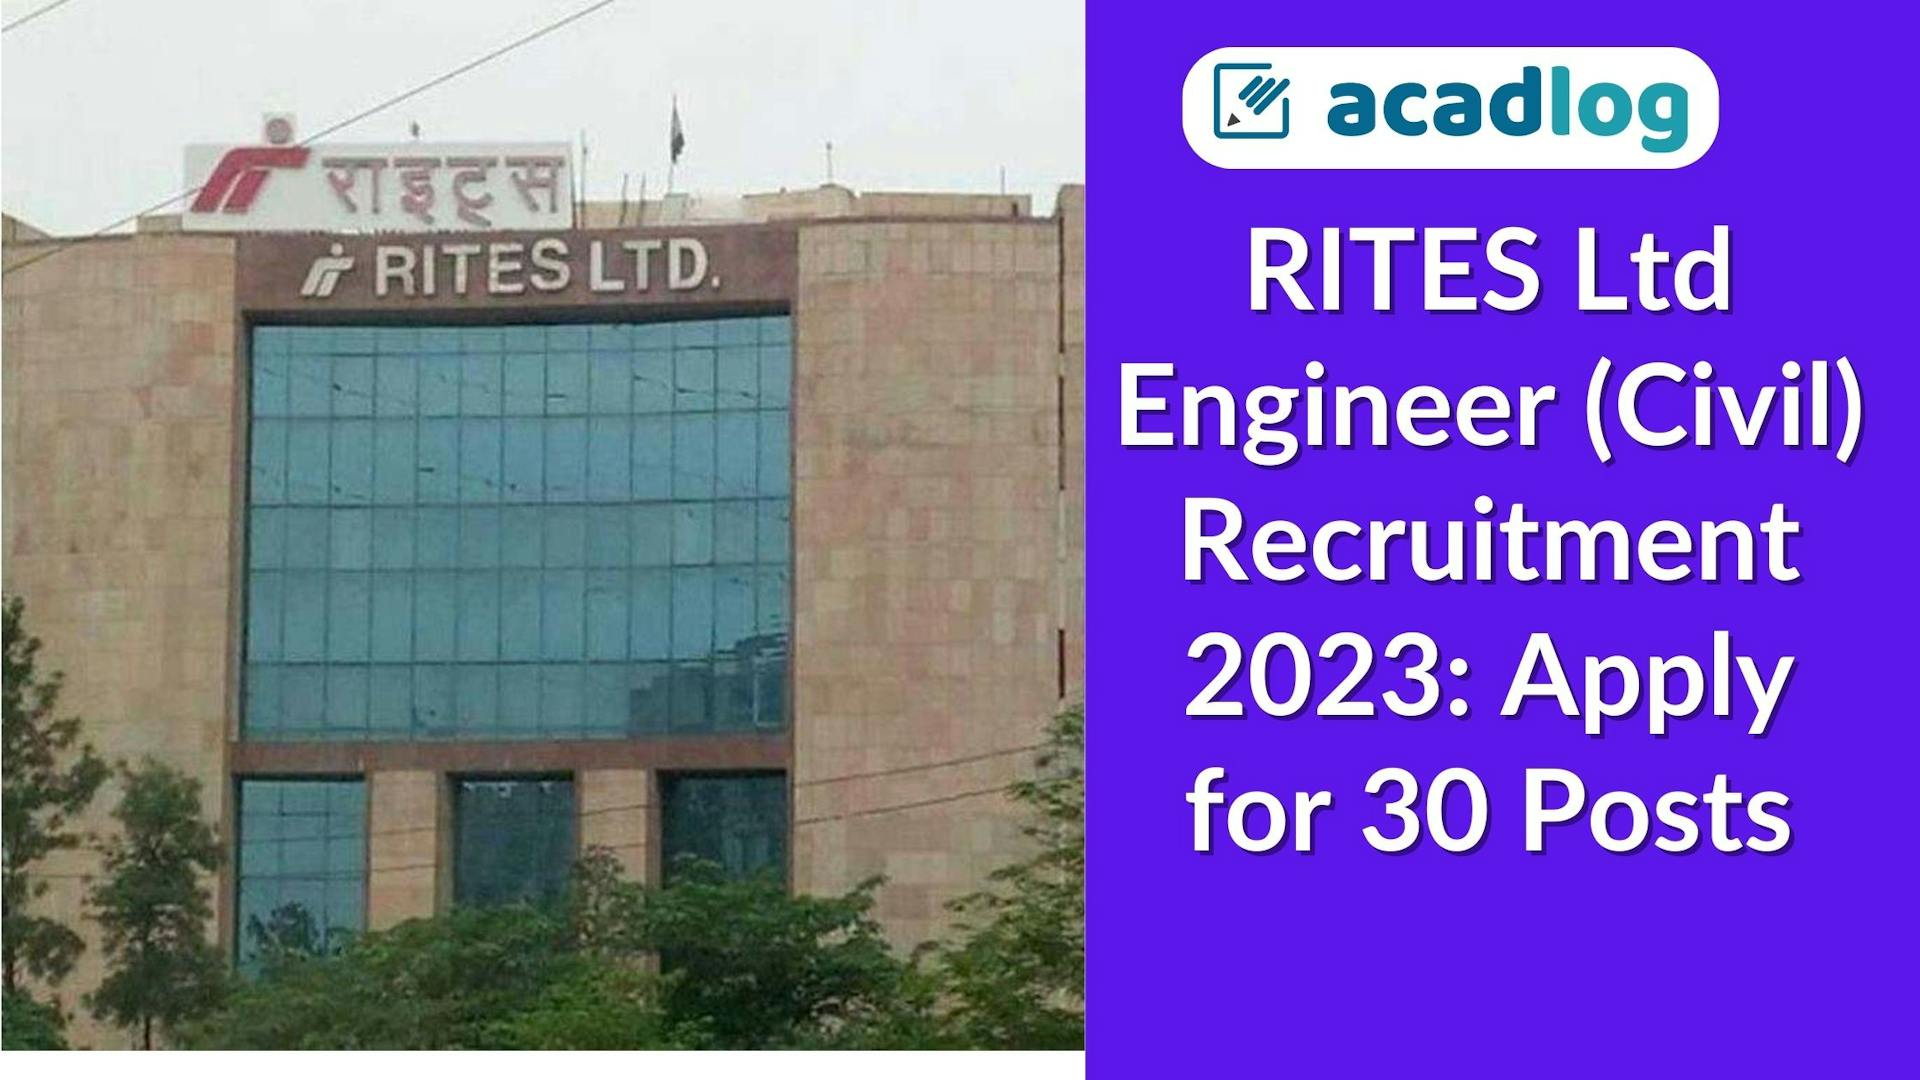 RITES Ltd Engineer (Civil) Recruitment 2023: Apply for 30 Posts